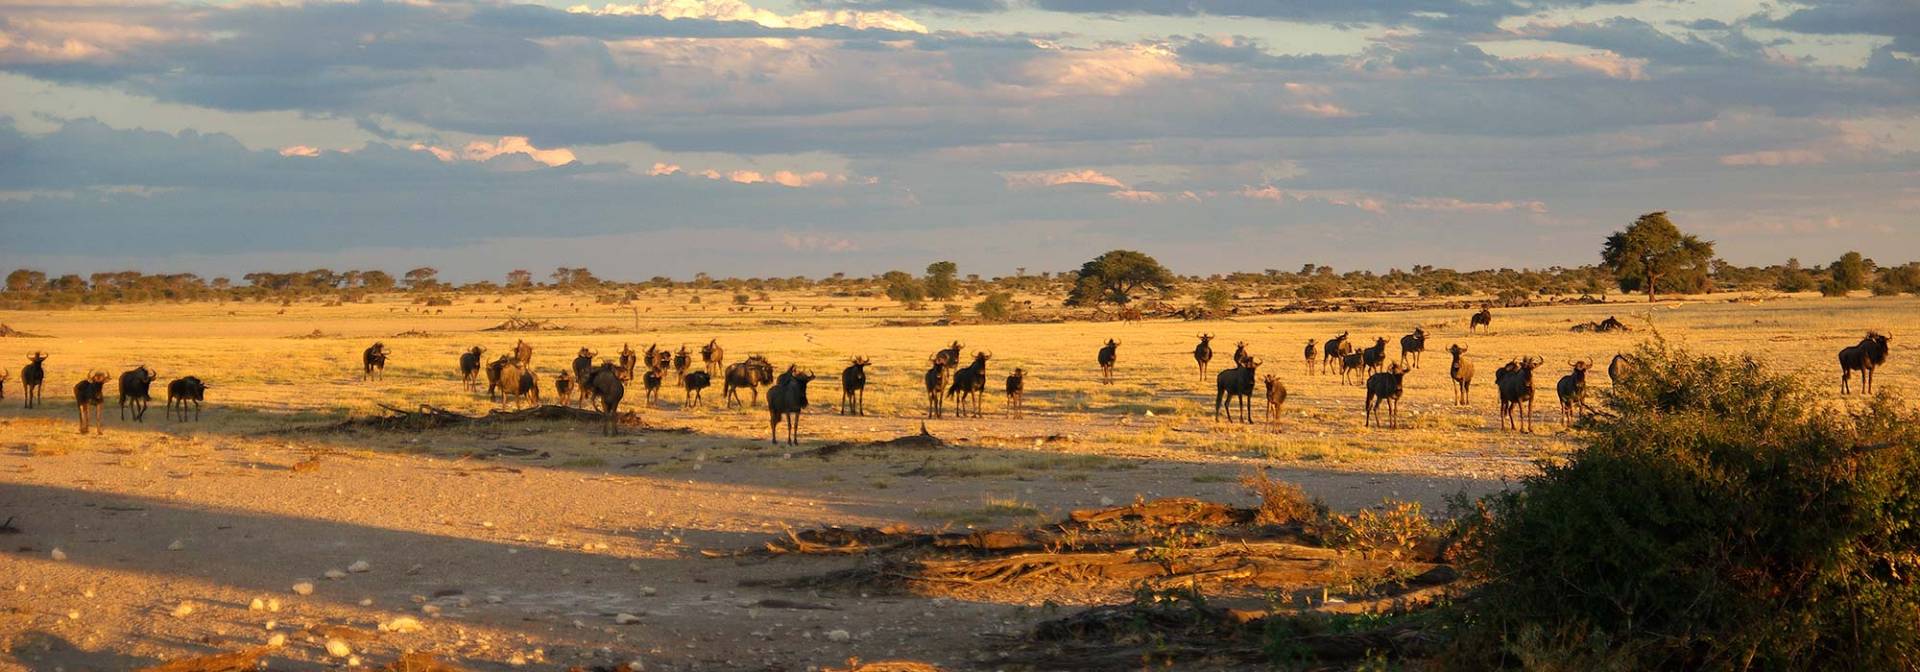 Gnuherde in den Weiten Namibias